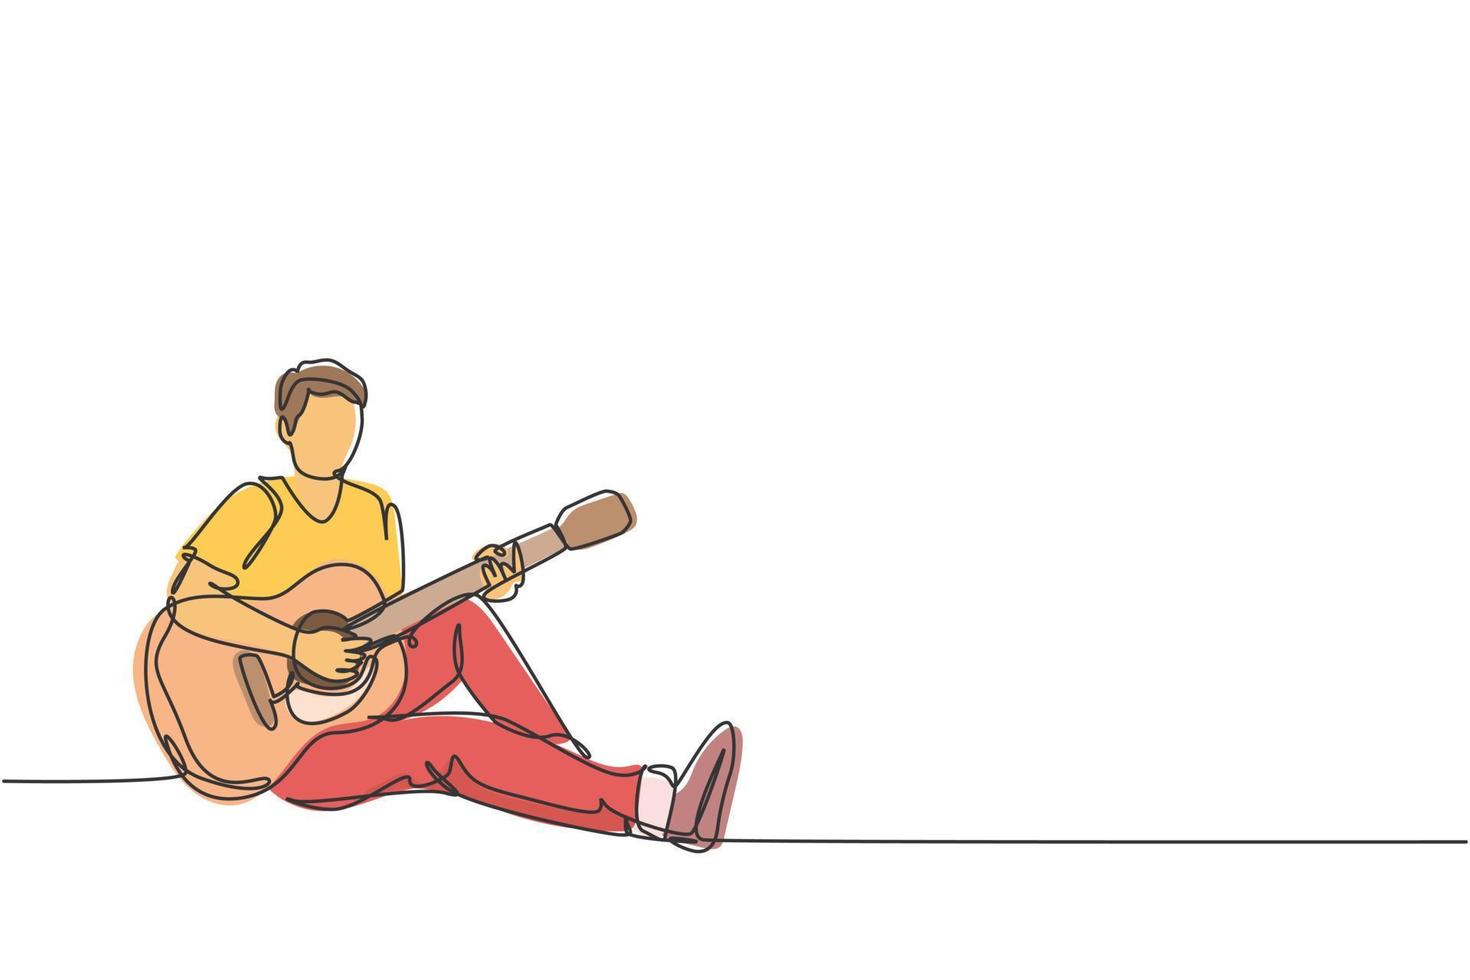 en kontinuerlig ritning av ung glad manlig gitarrist som sitter slappnar av på golvet medan han spelar akustisk gitarr. musiker konstnär prestanda koncept enkel linje rita design vektor illustration